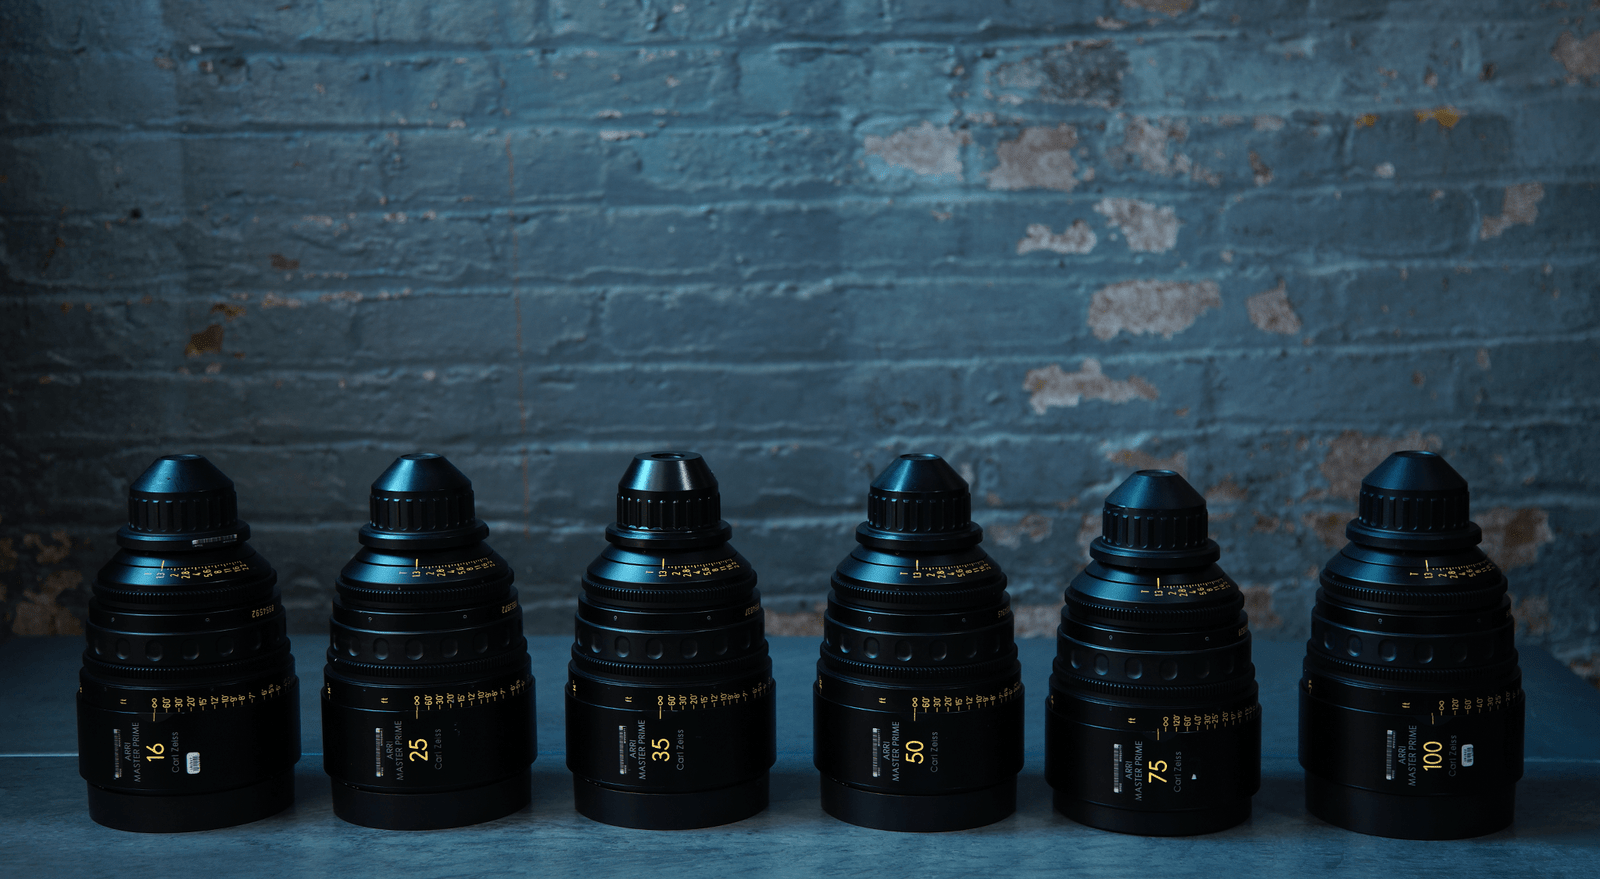 Lineup of Arri Master Prime lenses